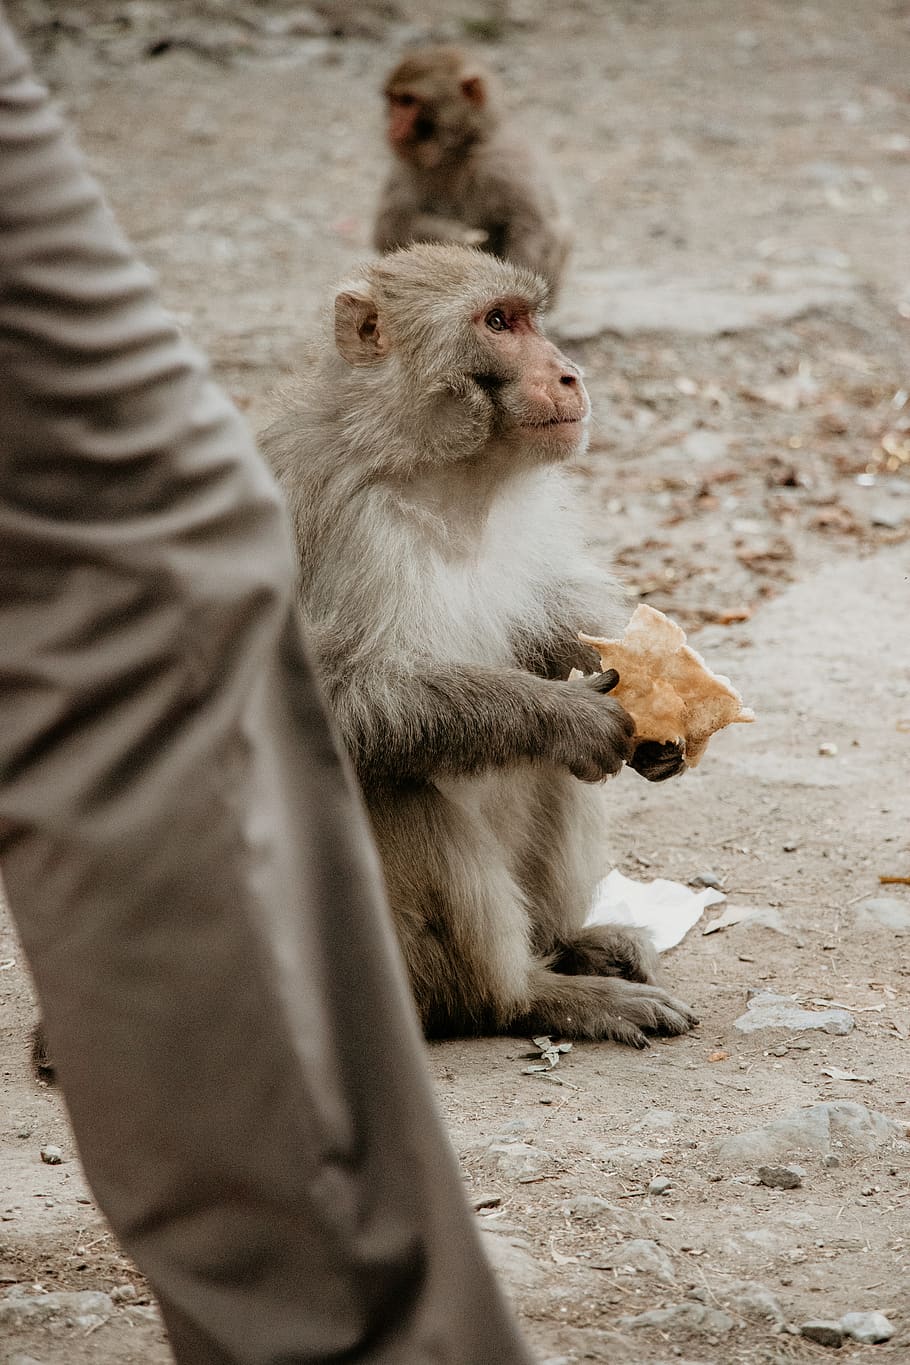 two monkeys sitting on the ground holding food, animal, wildlife